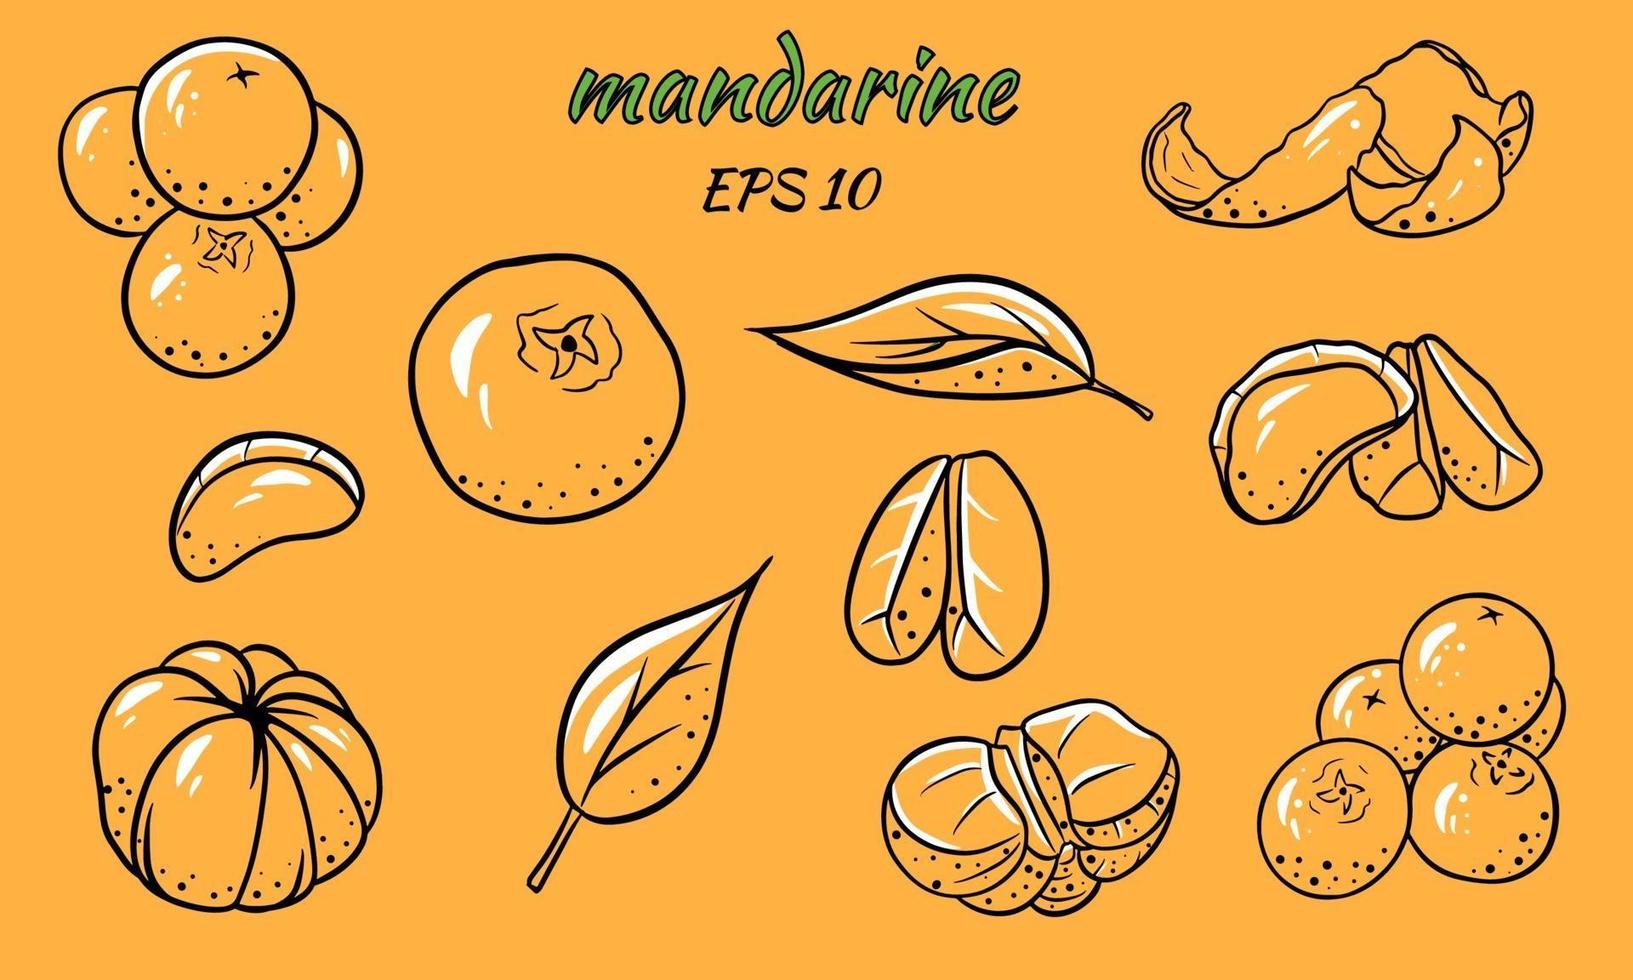 ensemble d'illustrations vectorielles de mandarines. vecteur